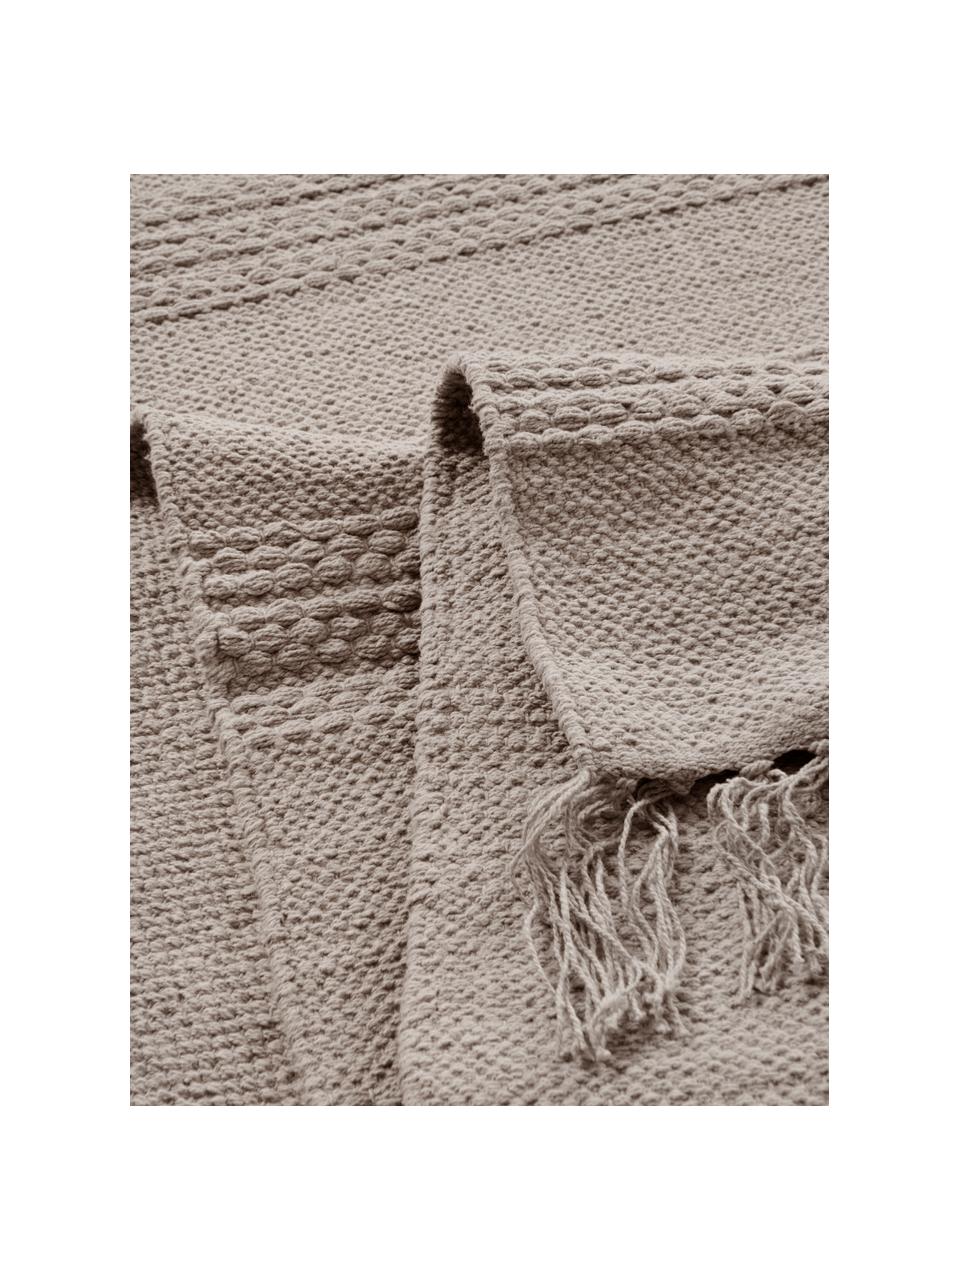 Katoenen vloerkleed Tanya met ton-sur-ton weefpatroon en franjes, 100% katoen, Taupe, B 160 x L 230 cm (maat M)